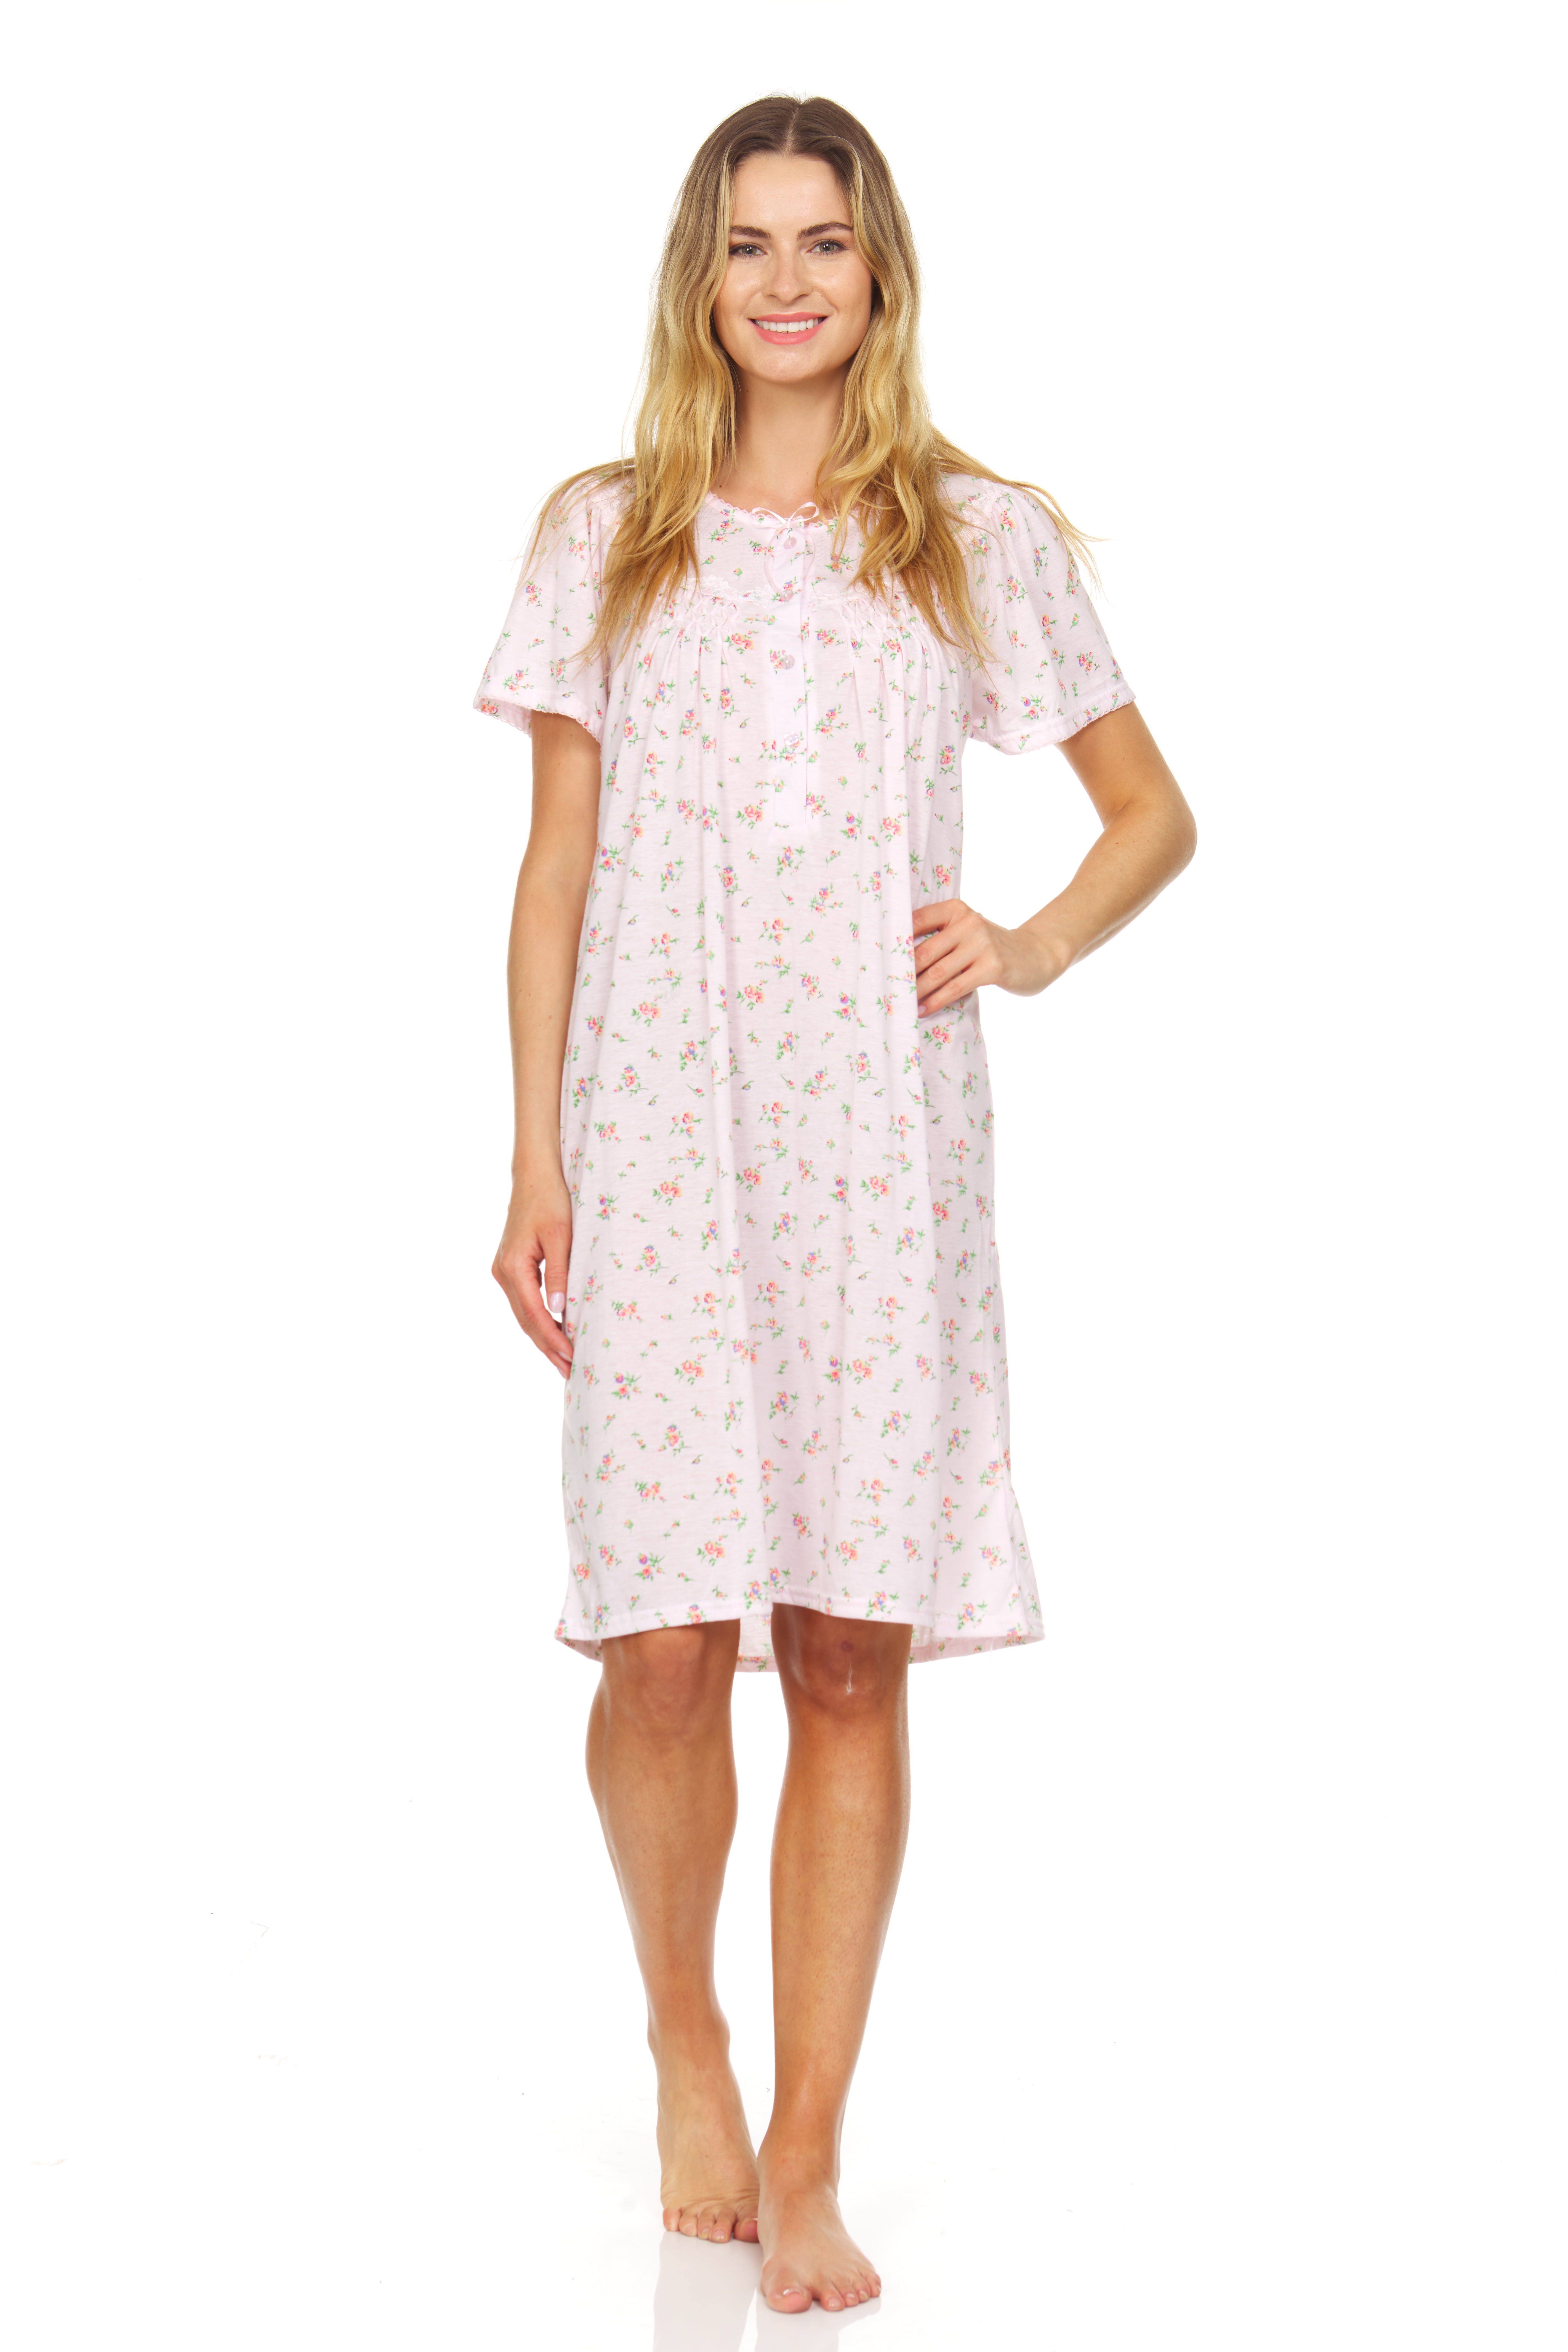 00136 Women Nightgown Sleepwear Pajamas Short Sleeve Sleep Dress Nightshirt Pink XL